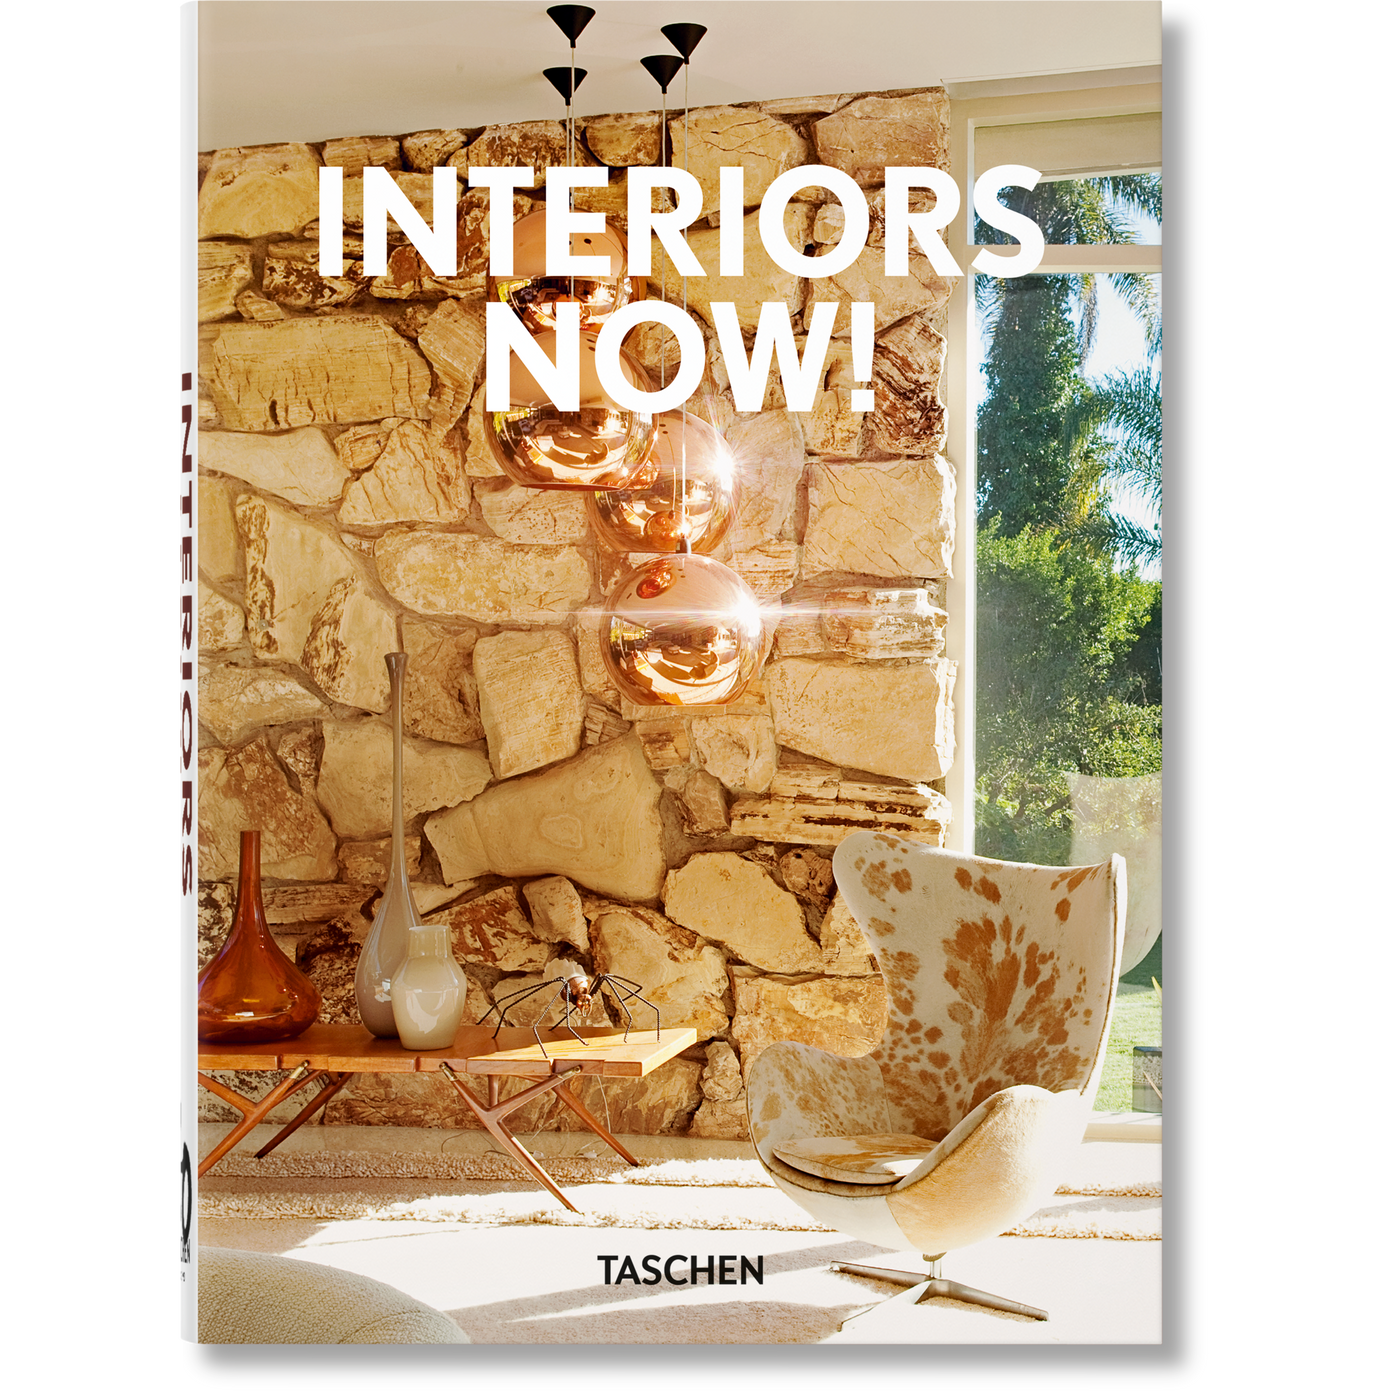 40th Anniversary: Interiors Now!